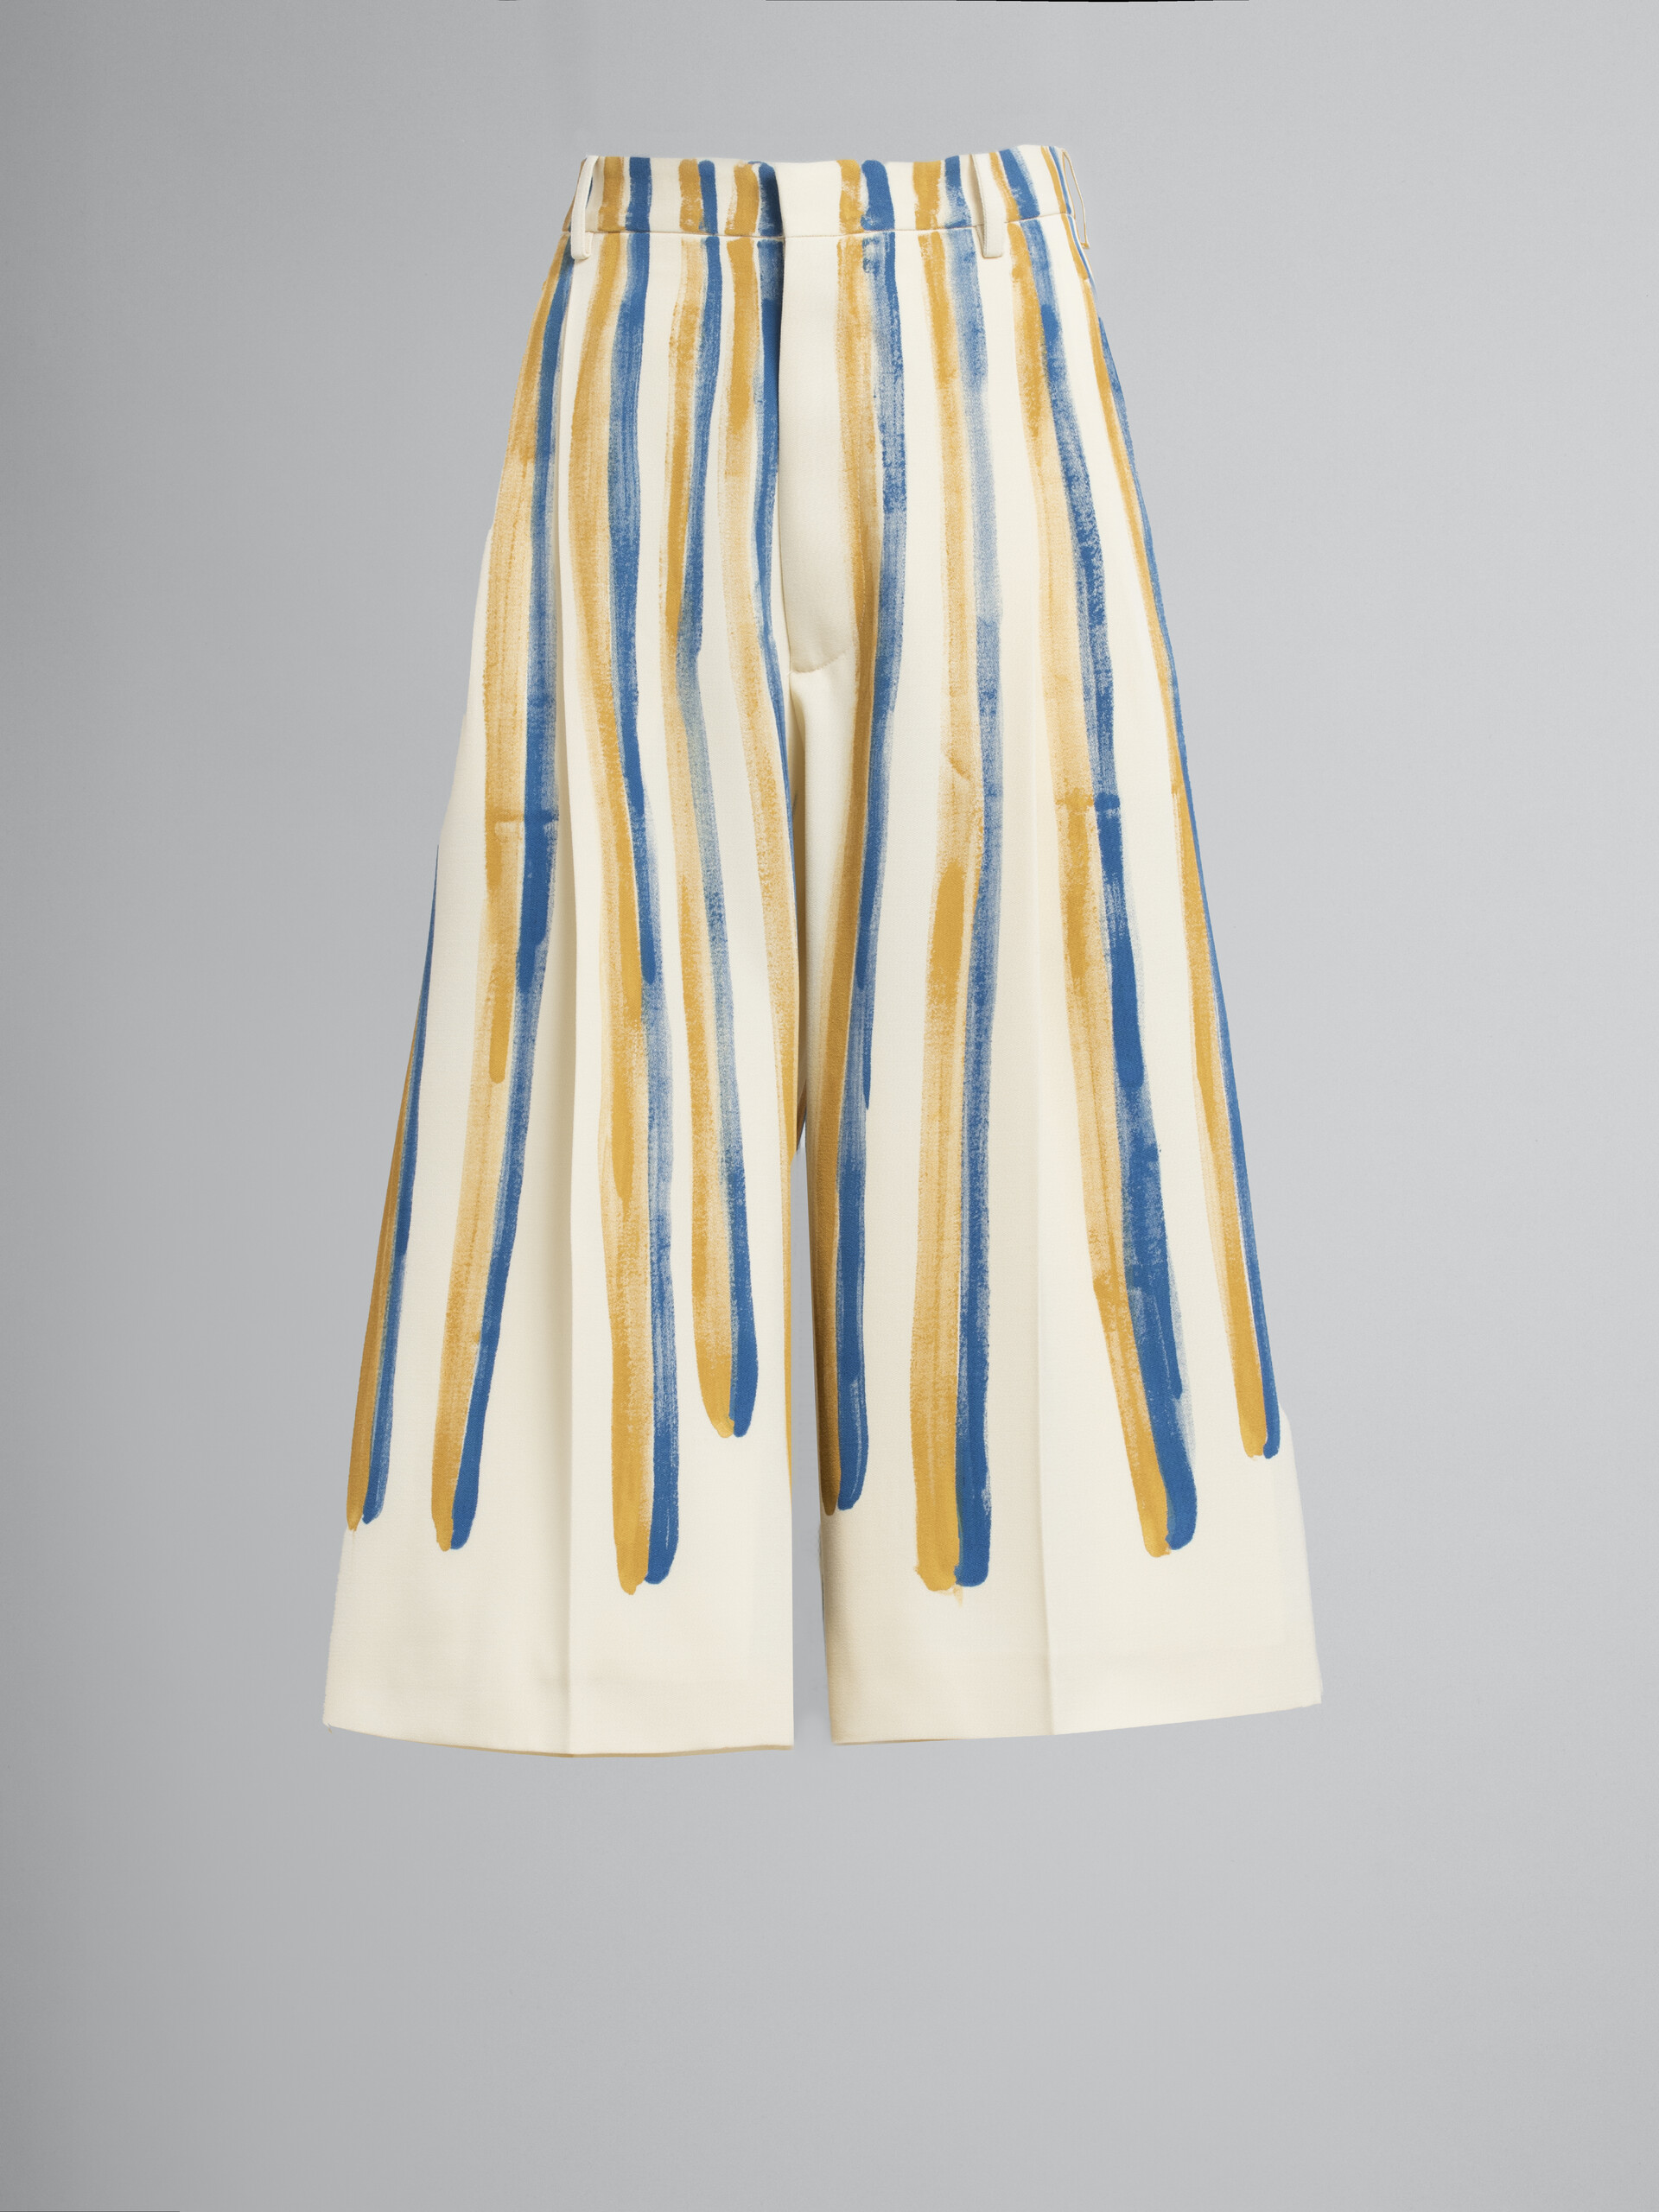 Pantalones cortos grain de poudre Watercolour Stripe - Pantalones - Image 1